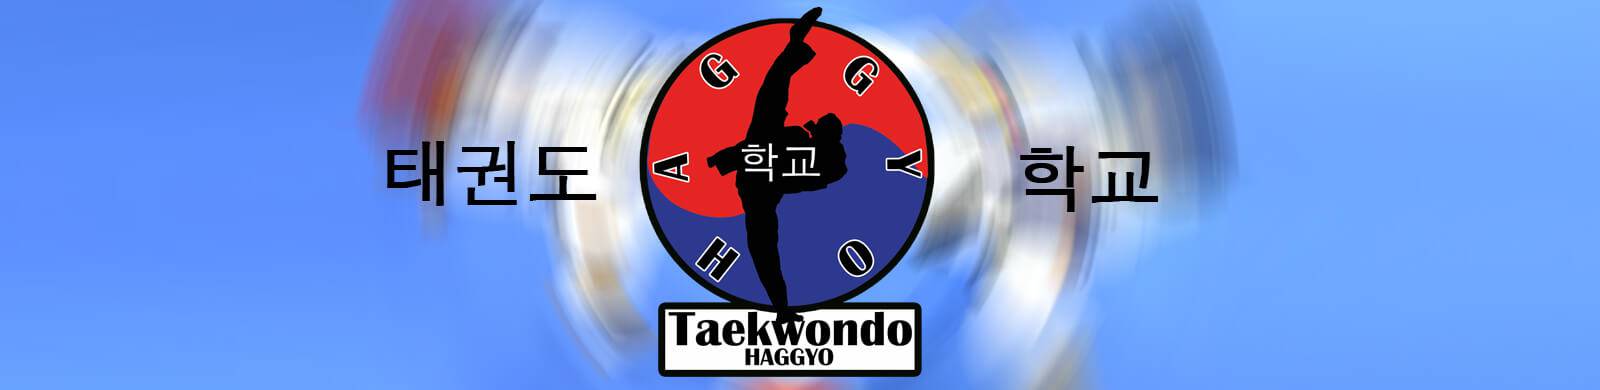 Taekwondo Regensburg Logo